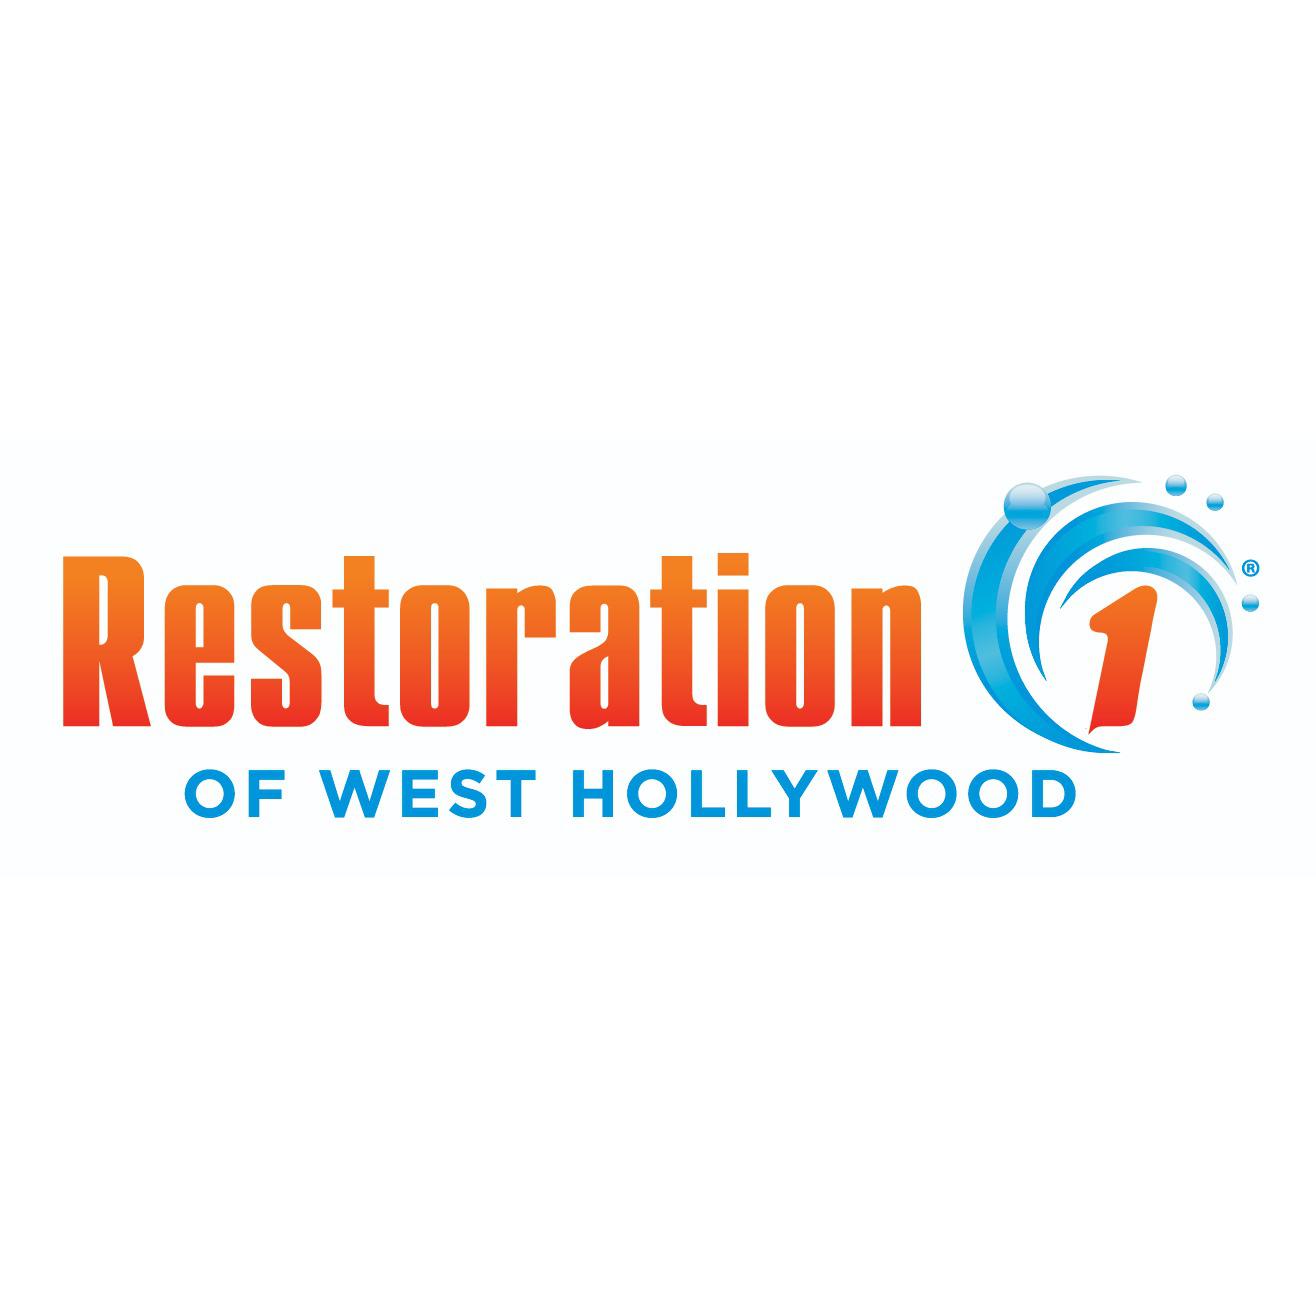 Restoration 1 of West Hollywood